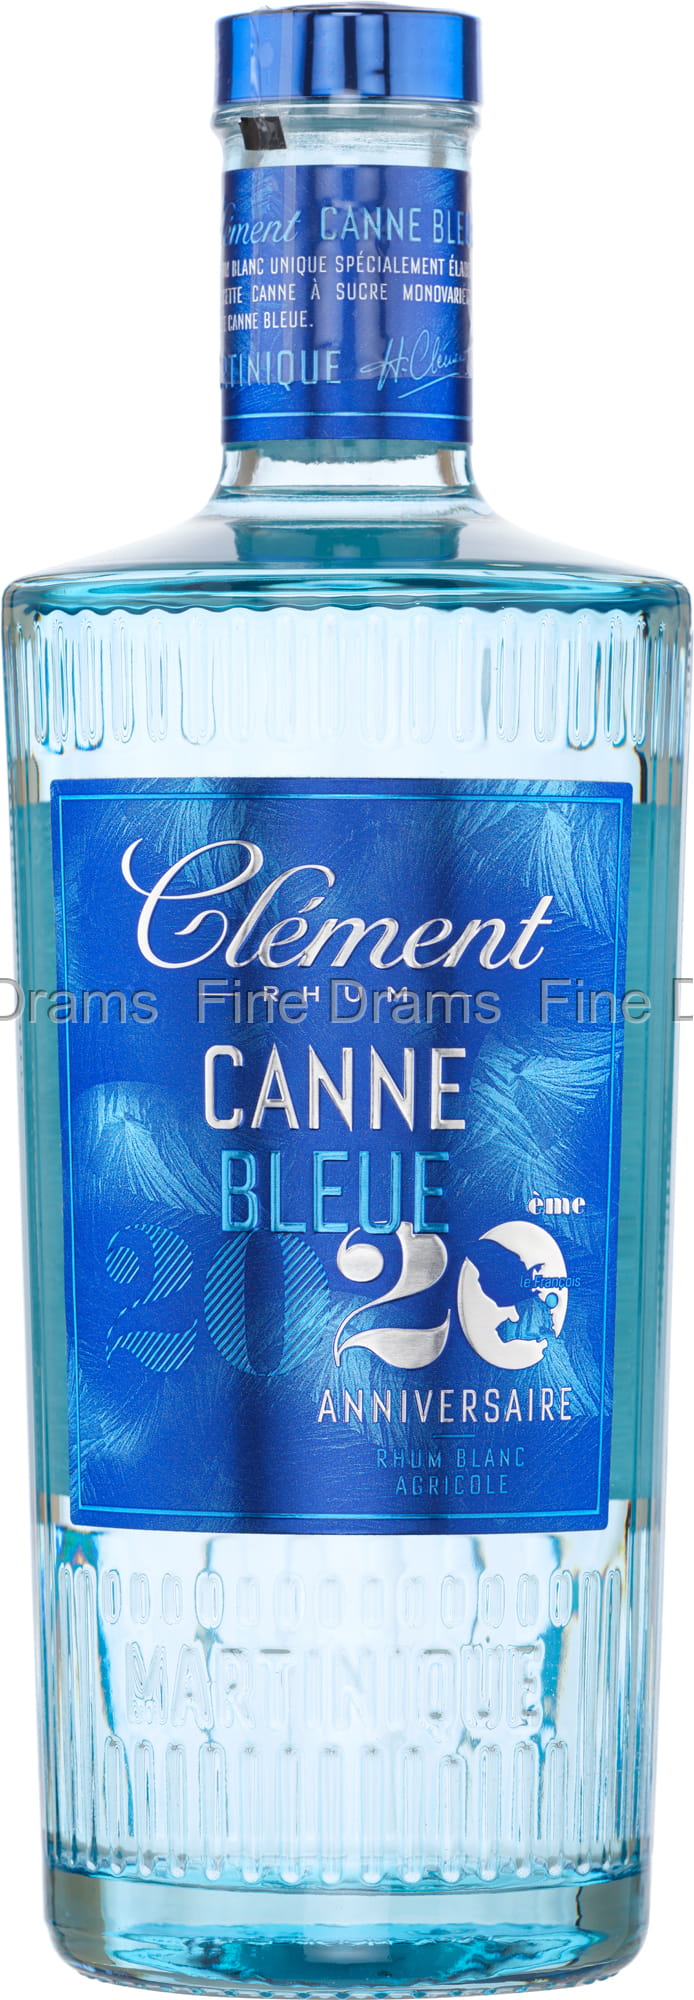 Rhum Clément Canne Bleue